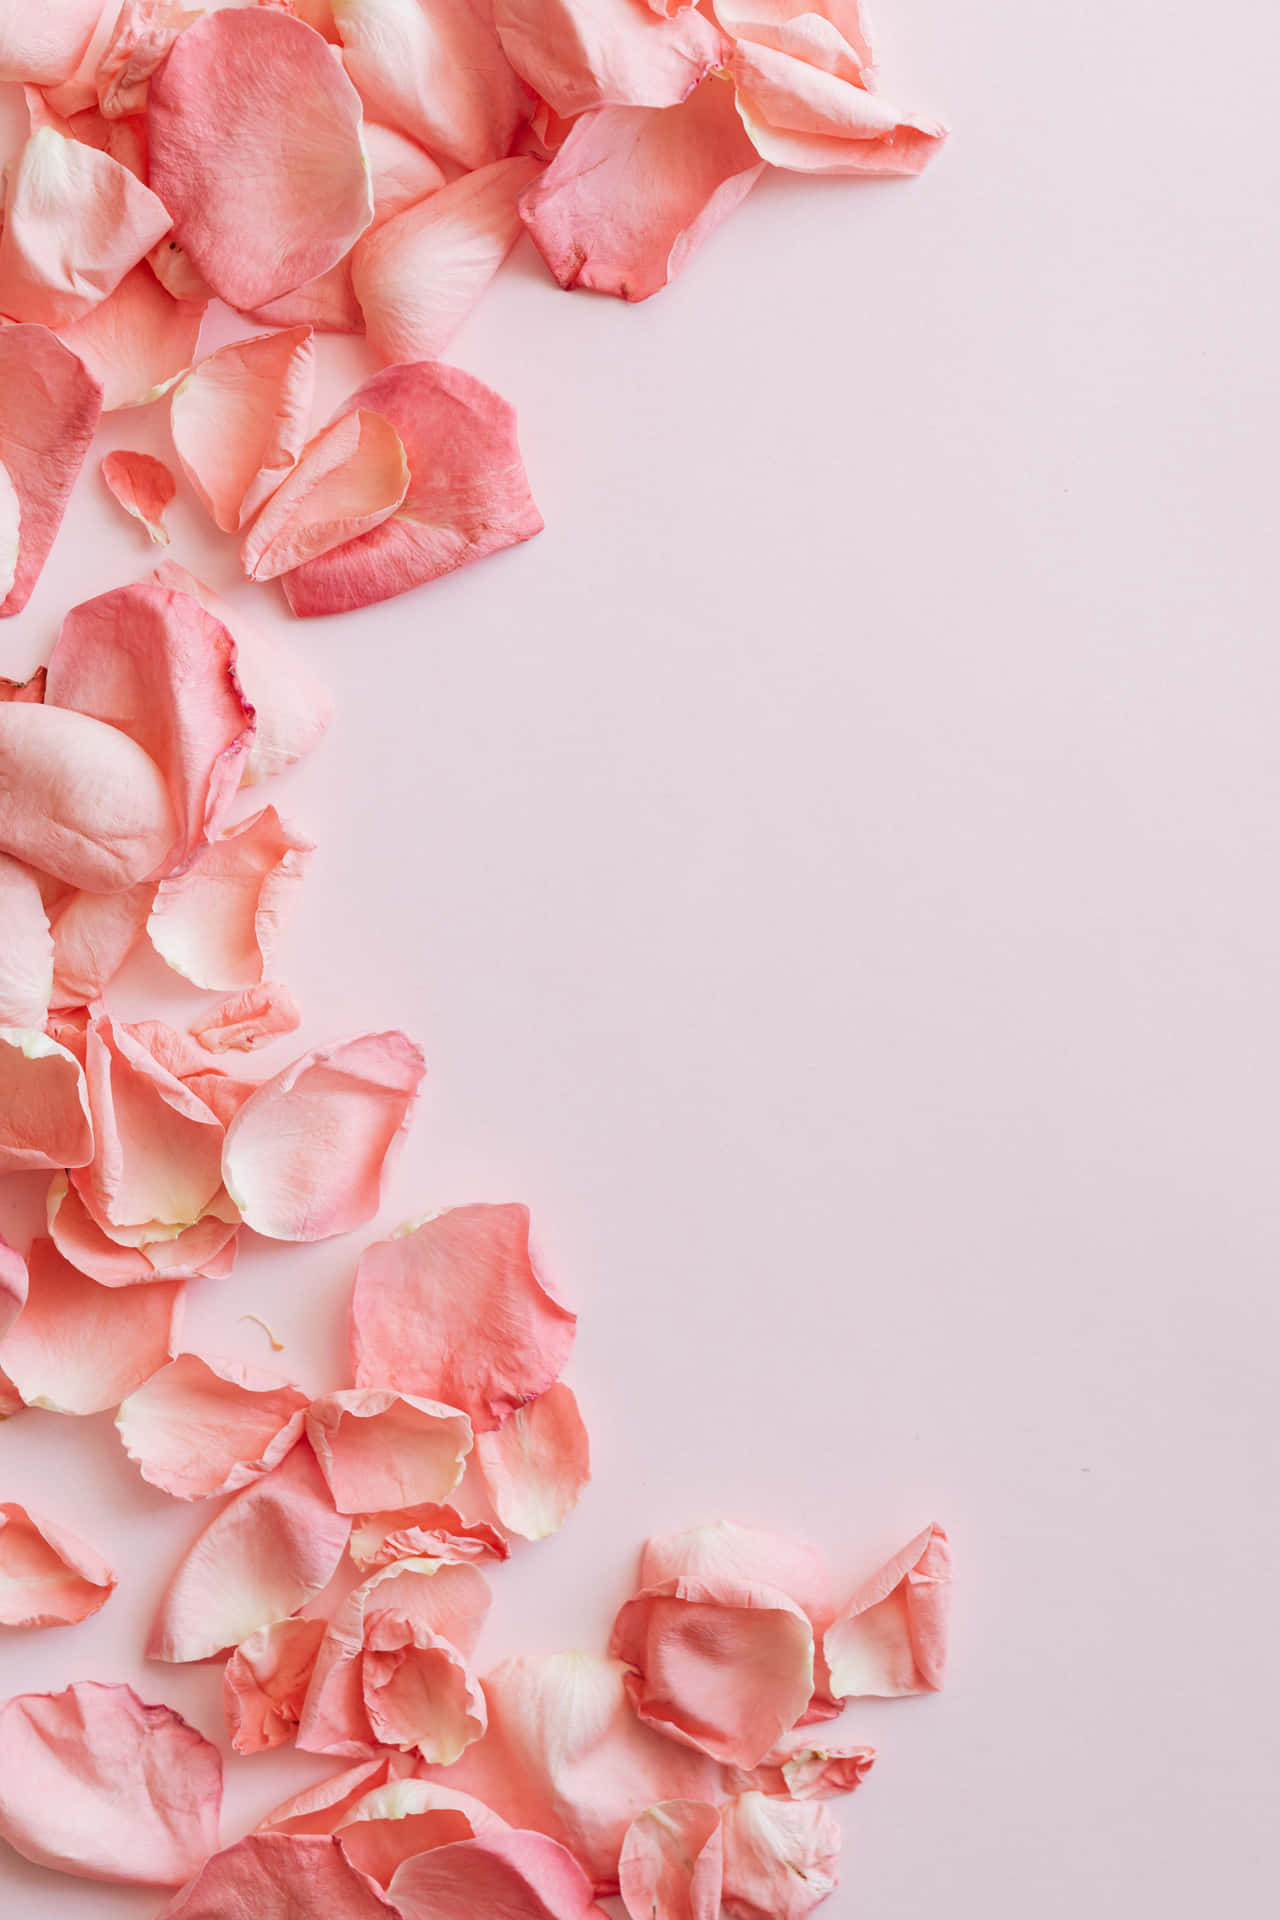 Pink Rose Petals On A Pink Background Wallpaper